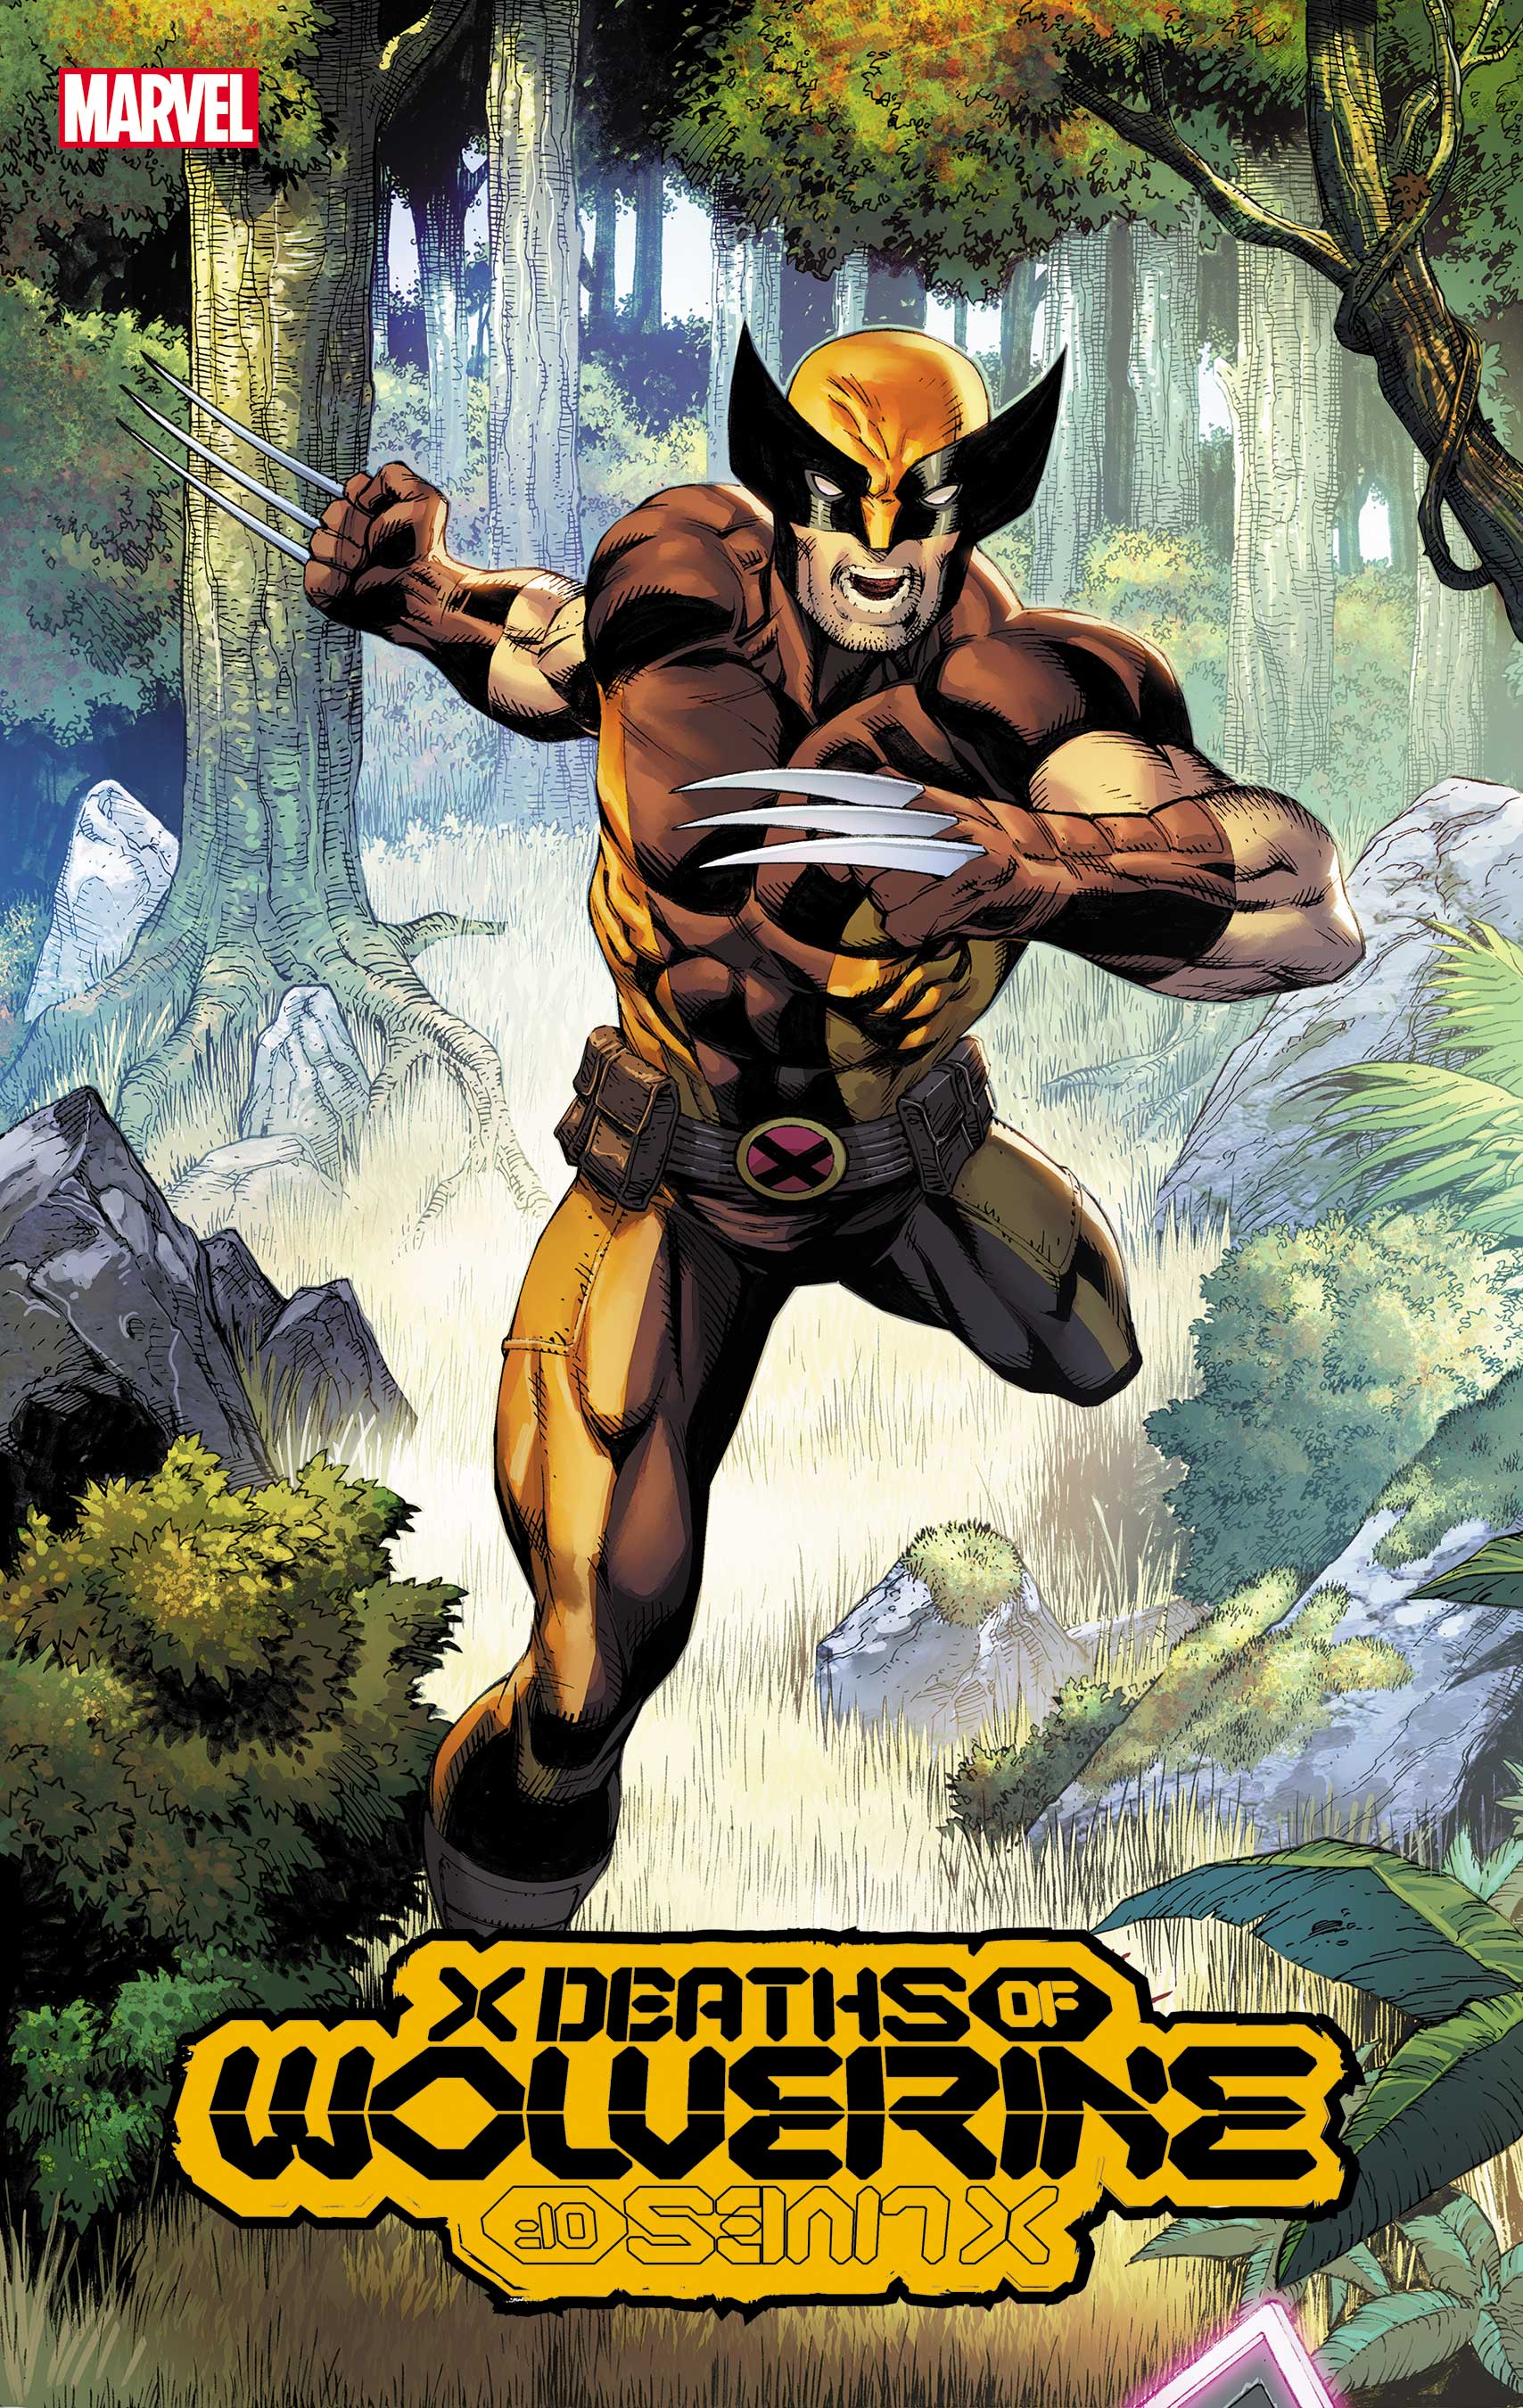 X Deaths of Wolverine (2022) #1 (Variant)